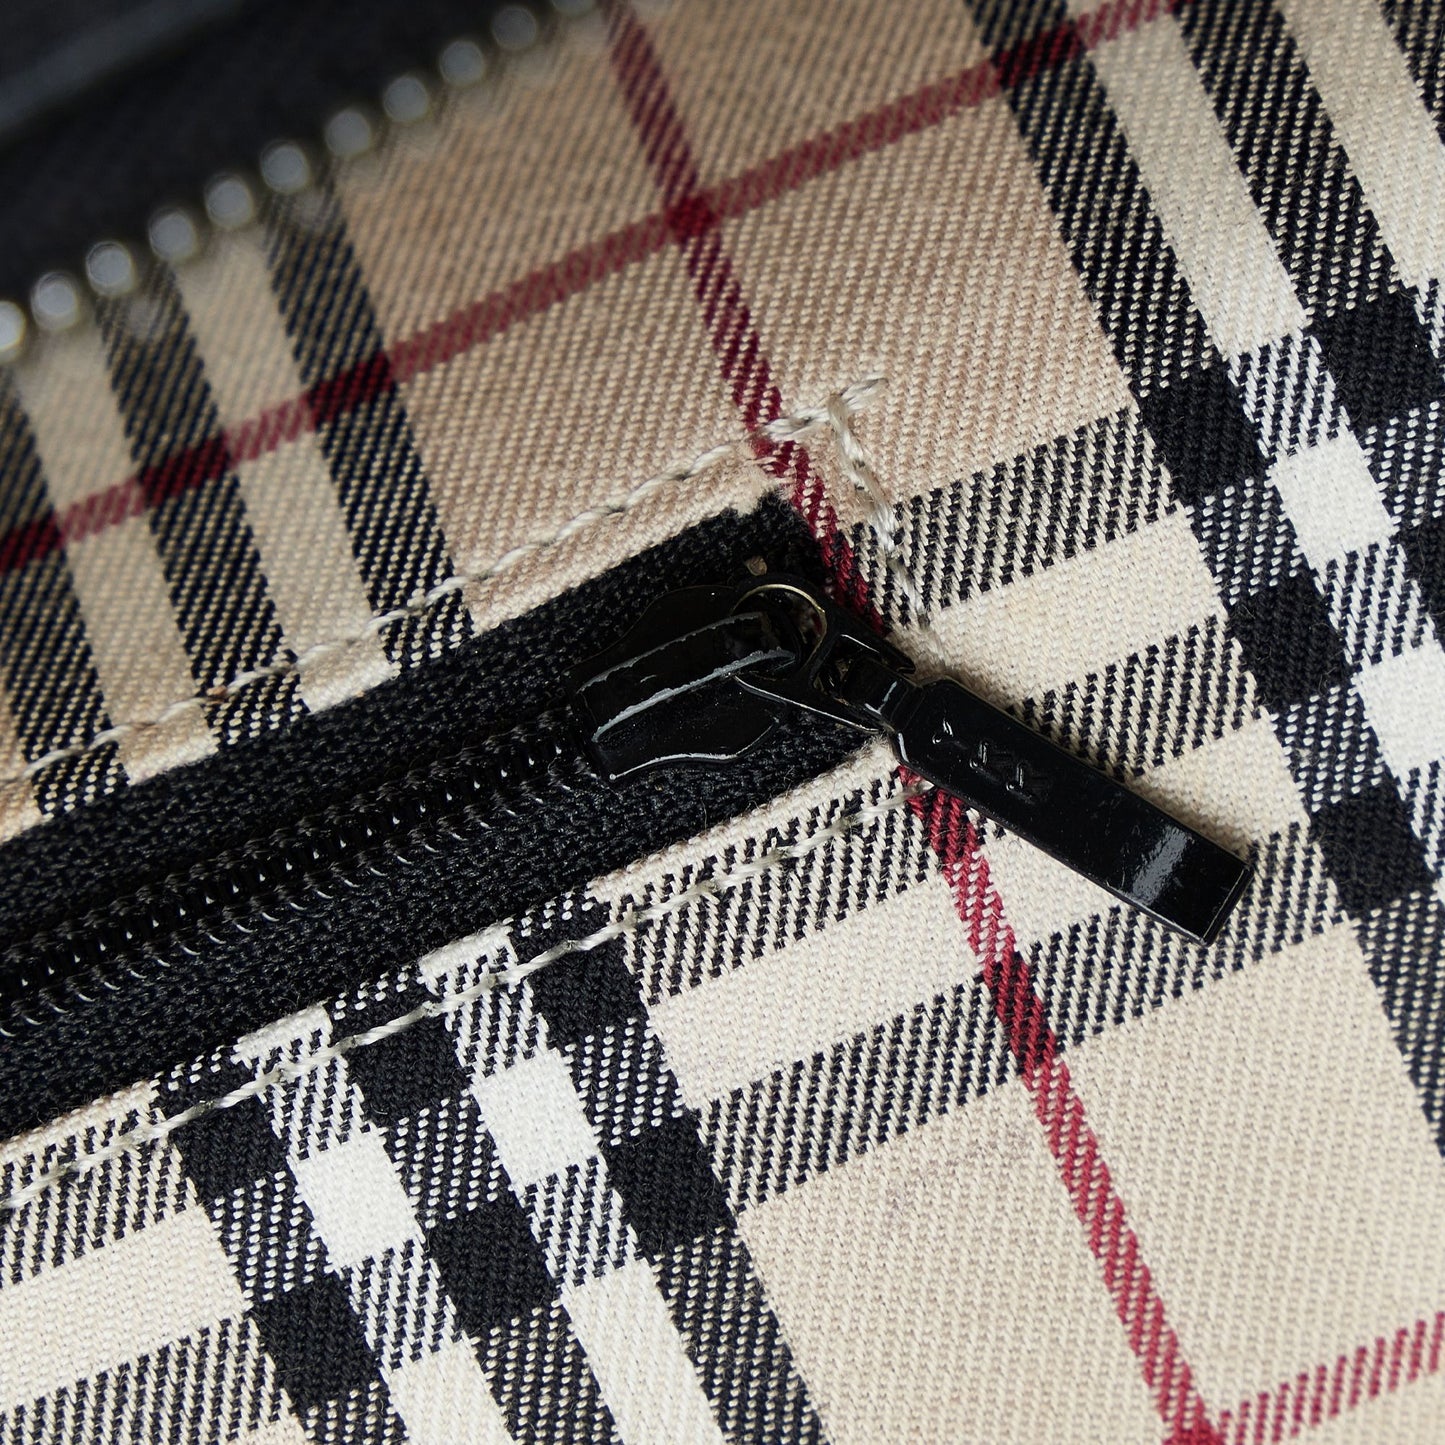 Burberry Structured Black Leather Shoulder Bag w Nova Check Plaid Interior